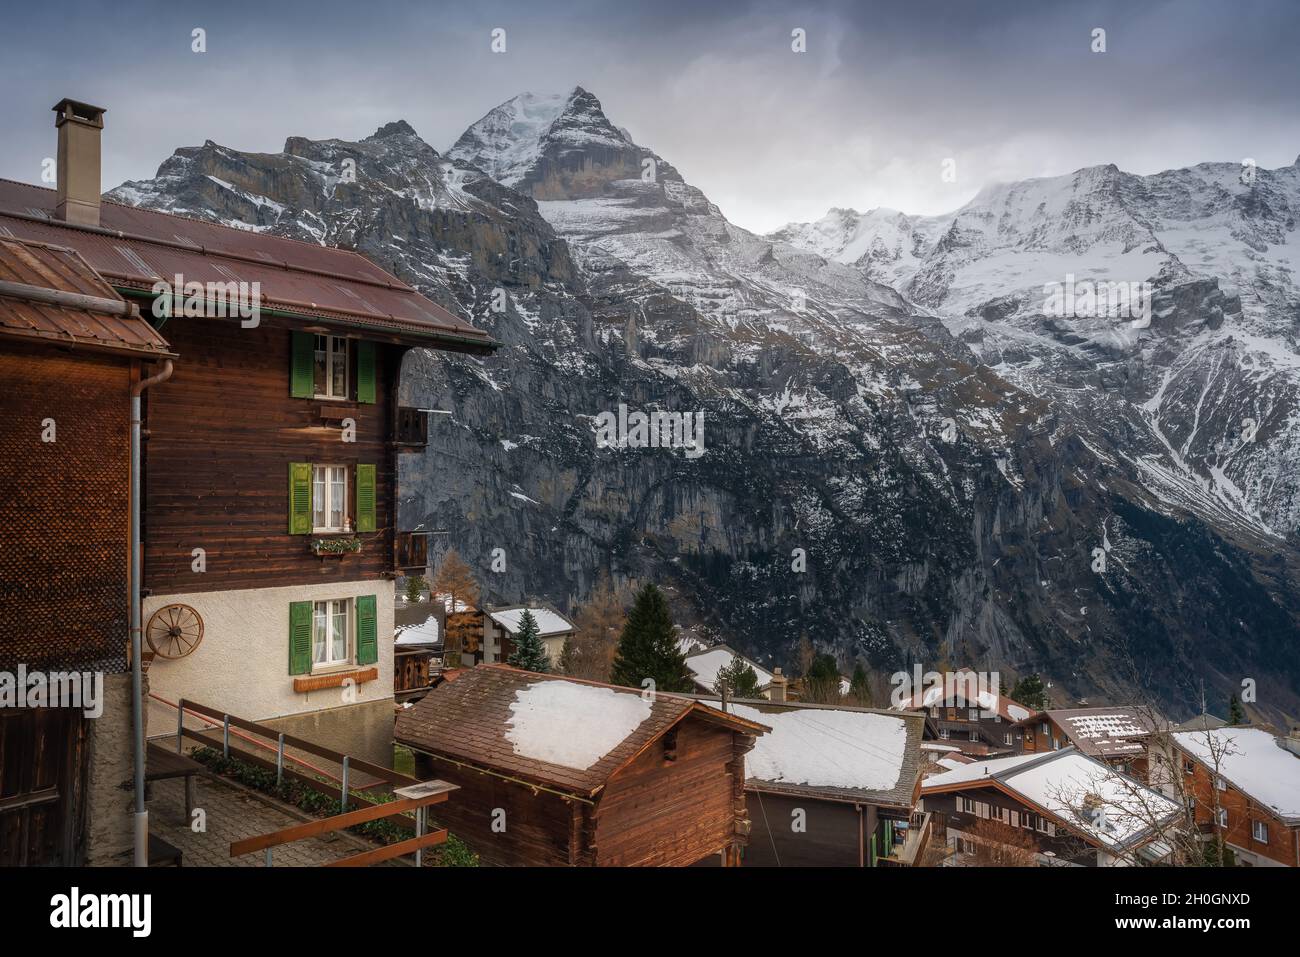 Houses at Murren Village with Jungfrau Mountain on background - Murren, Switzerland Stock Photo